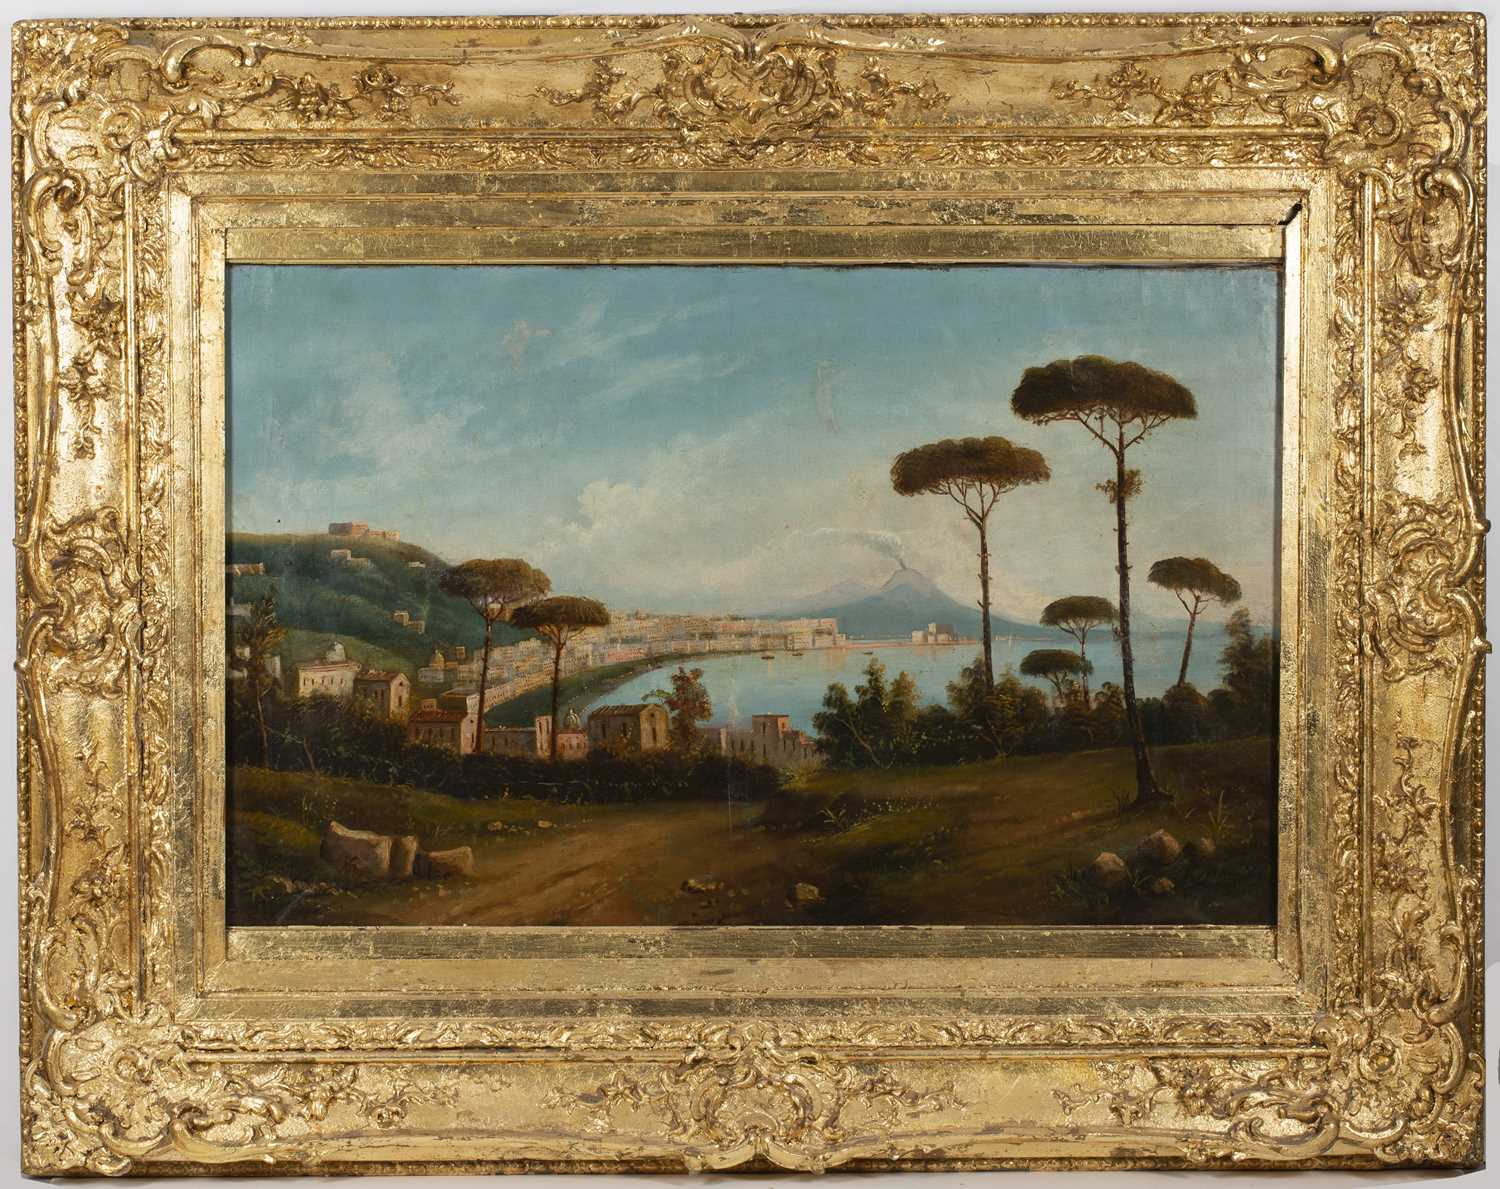 19th century Neapolitan school The Bay of Naples with Vesuvius erupting, oil on canvas, 65 x 104cm - Image 2 of 3